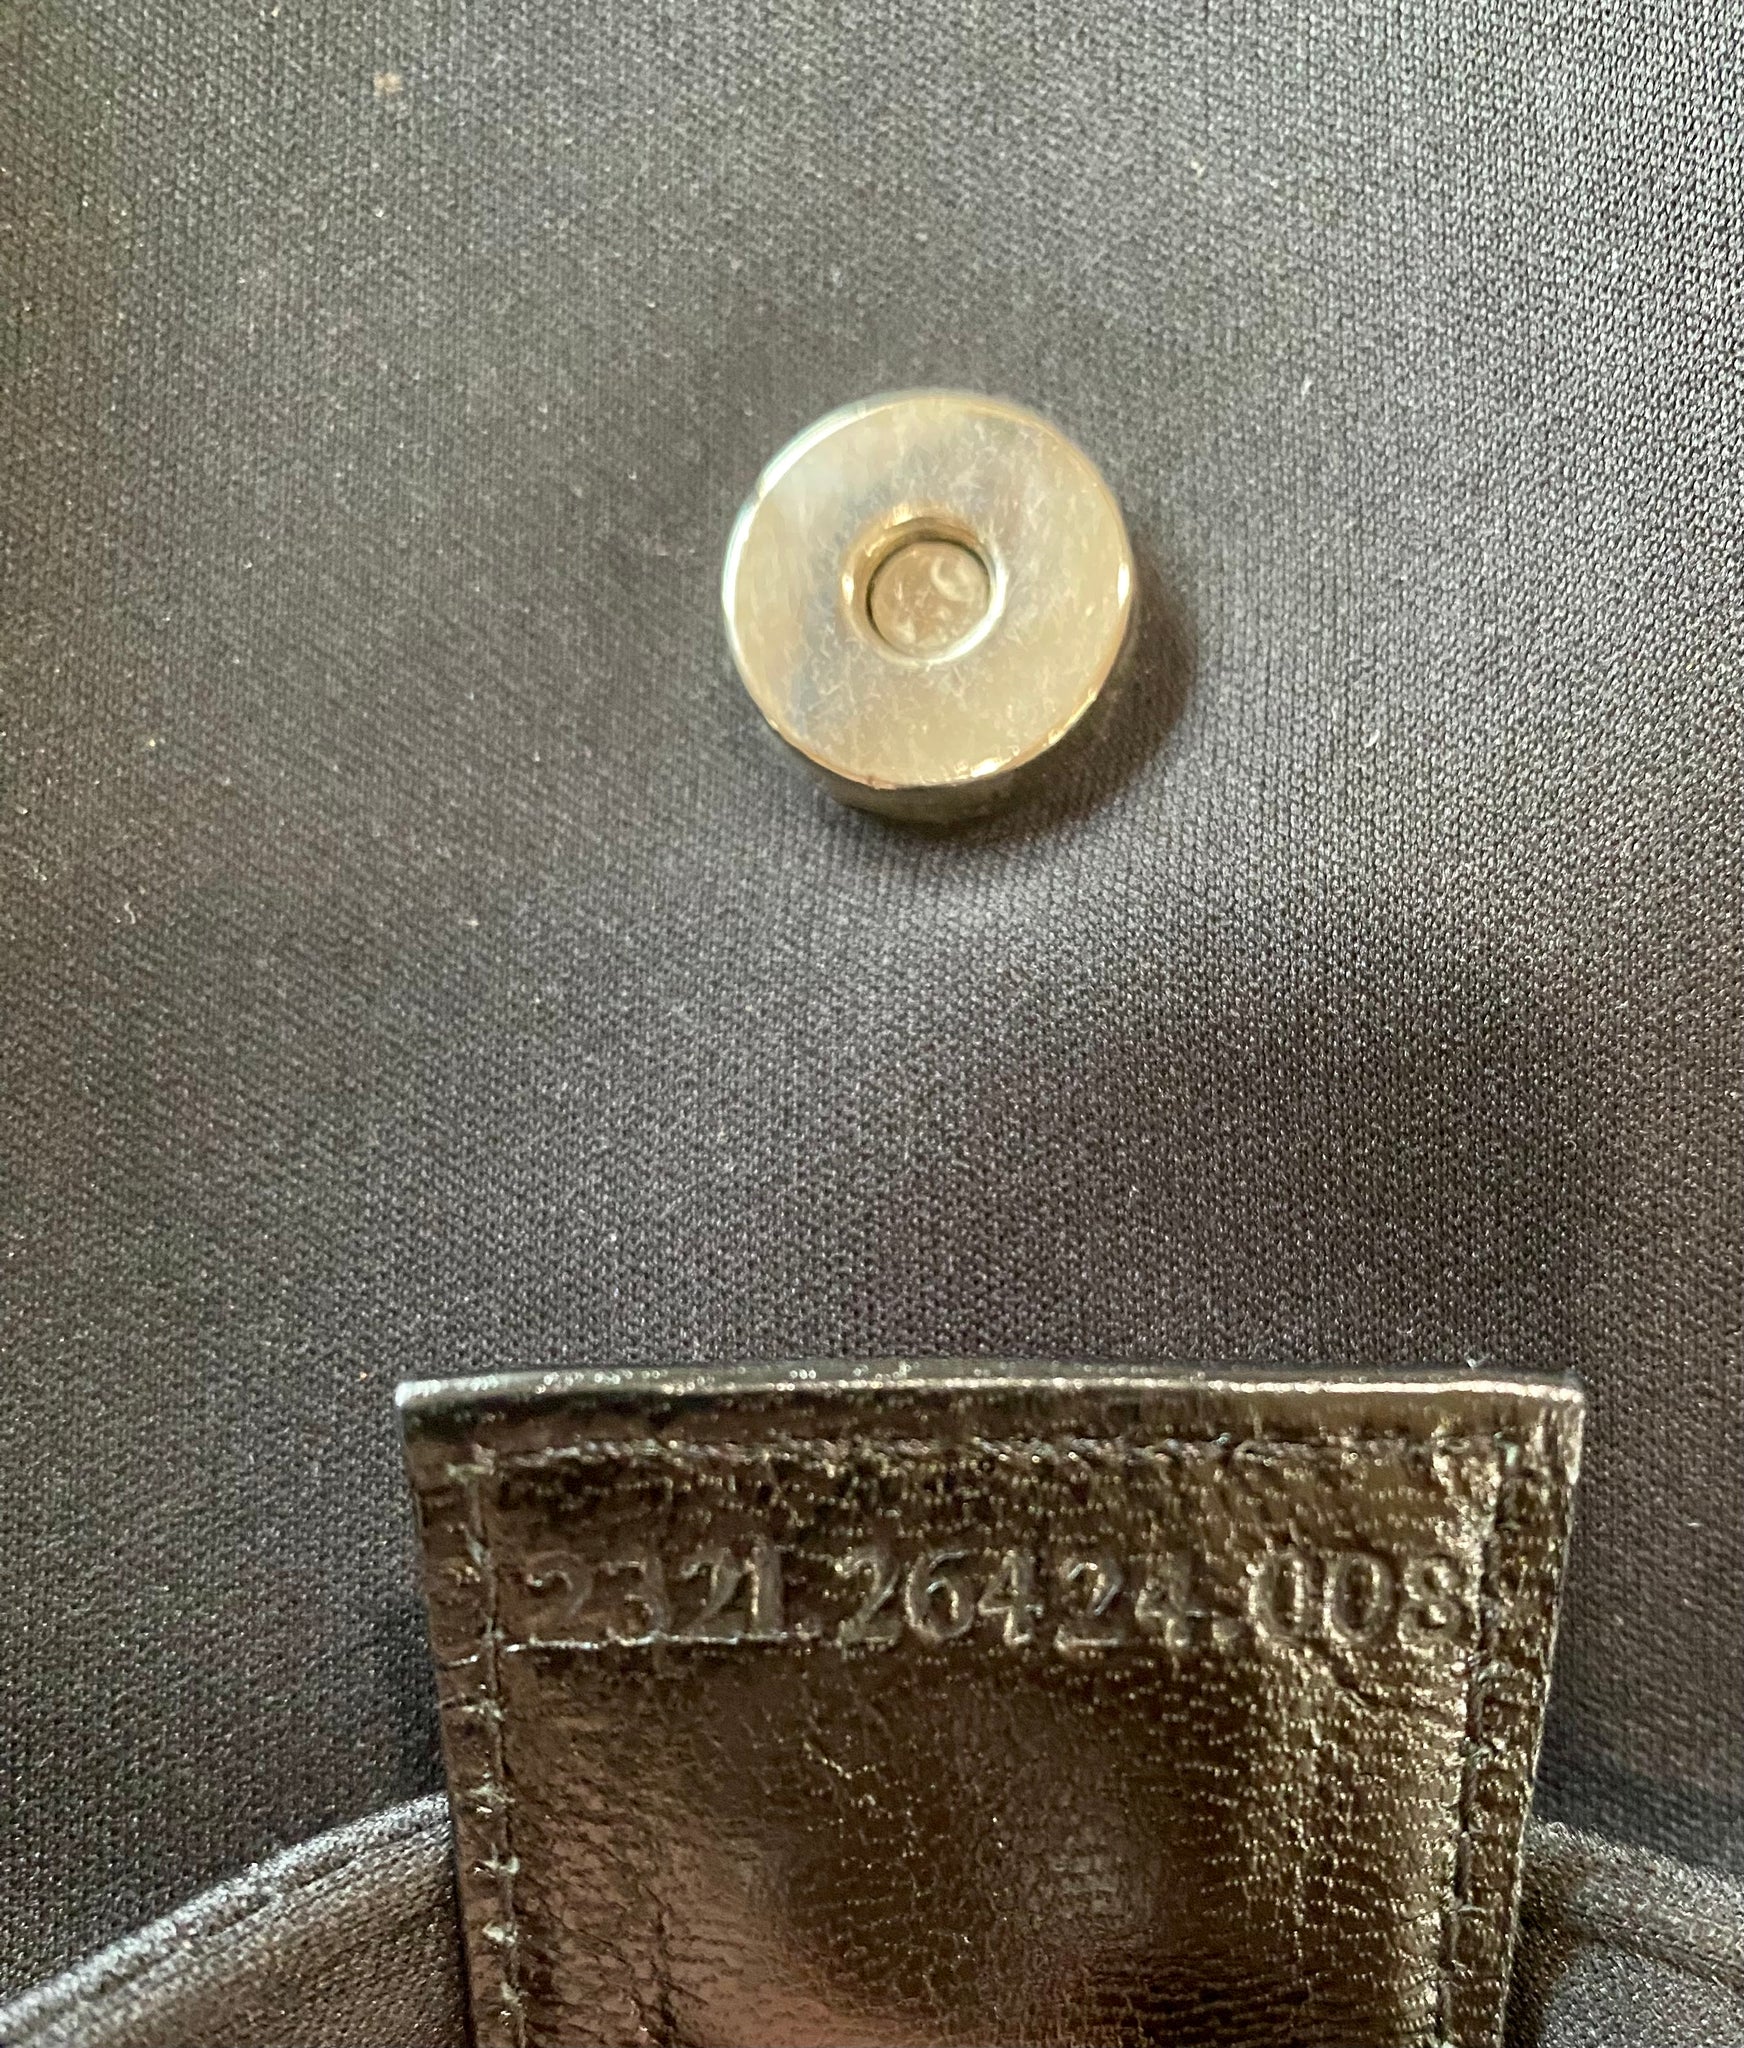 serial number vintage fendi bag